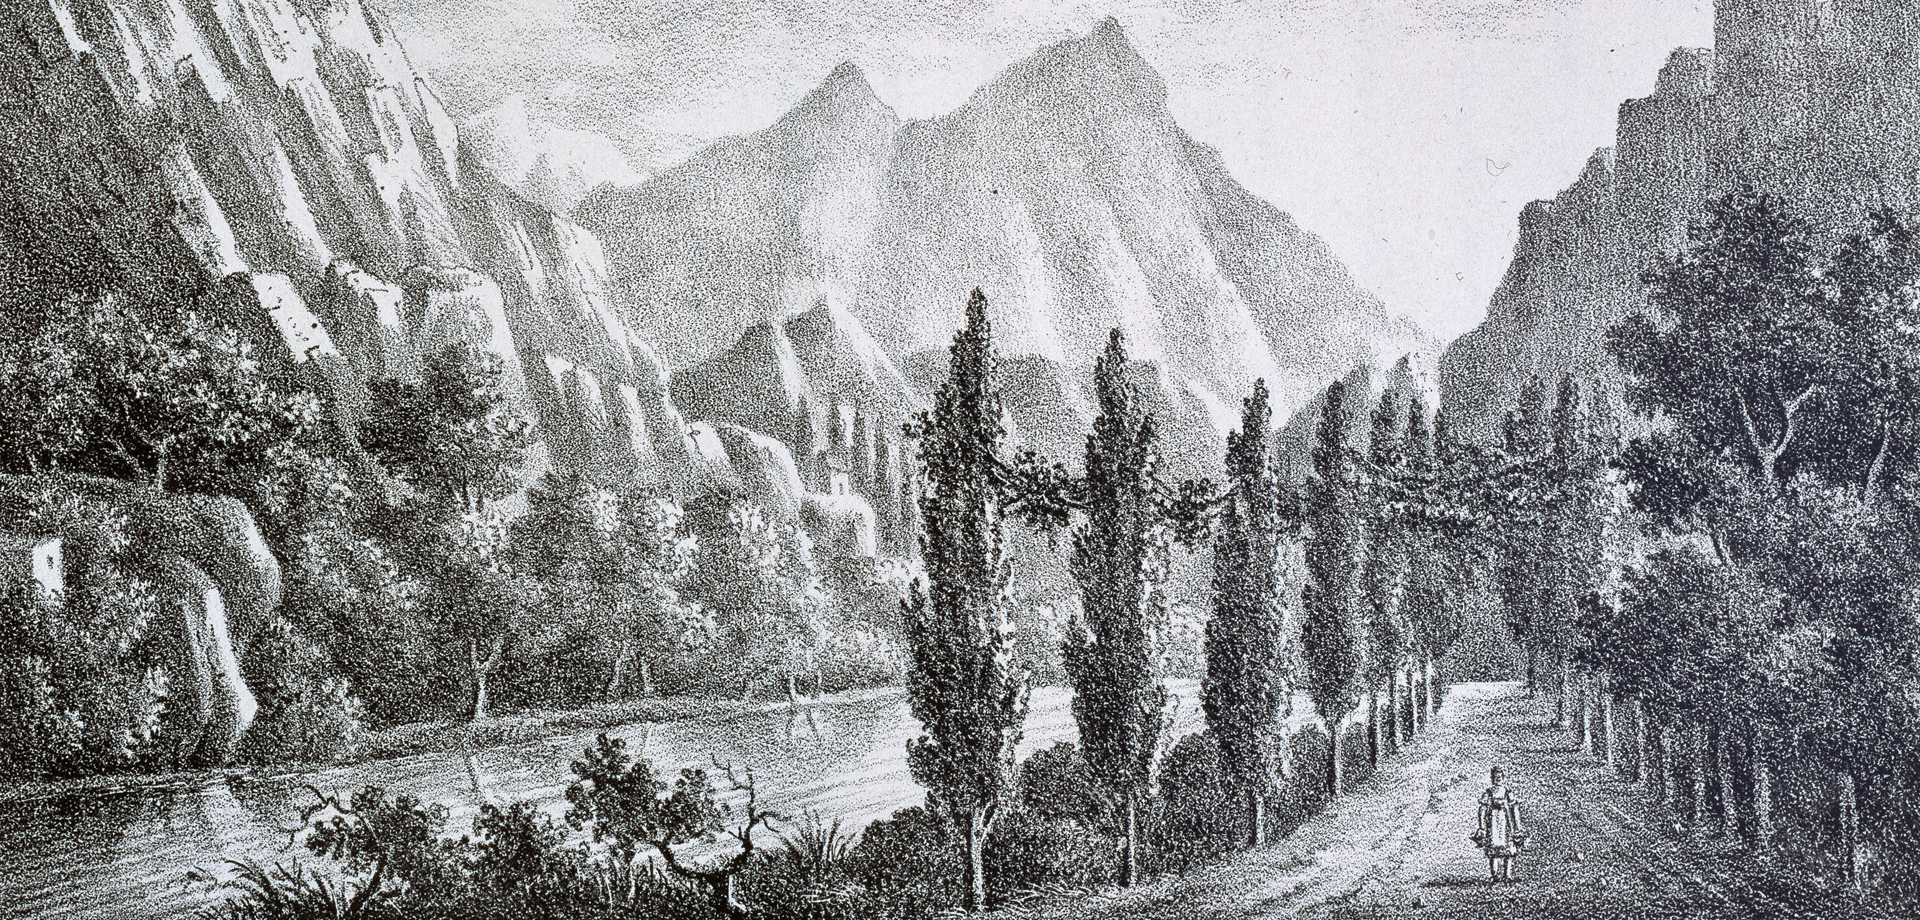 The Passage of the Mountain of Saint Gothard